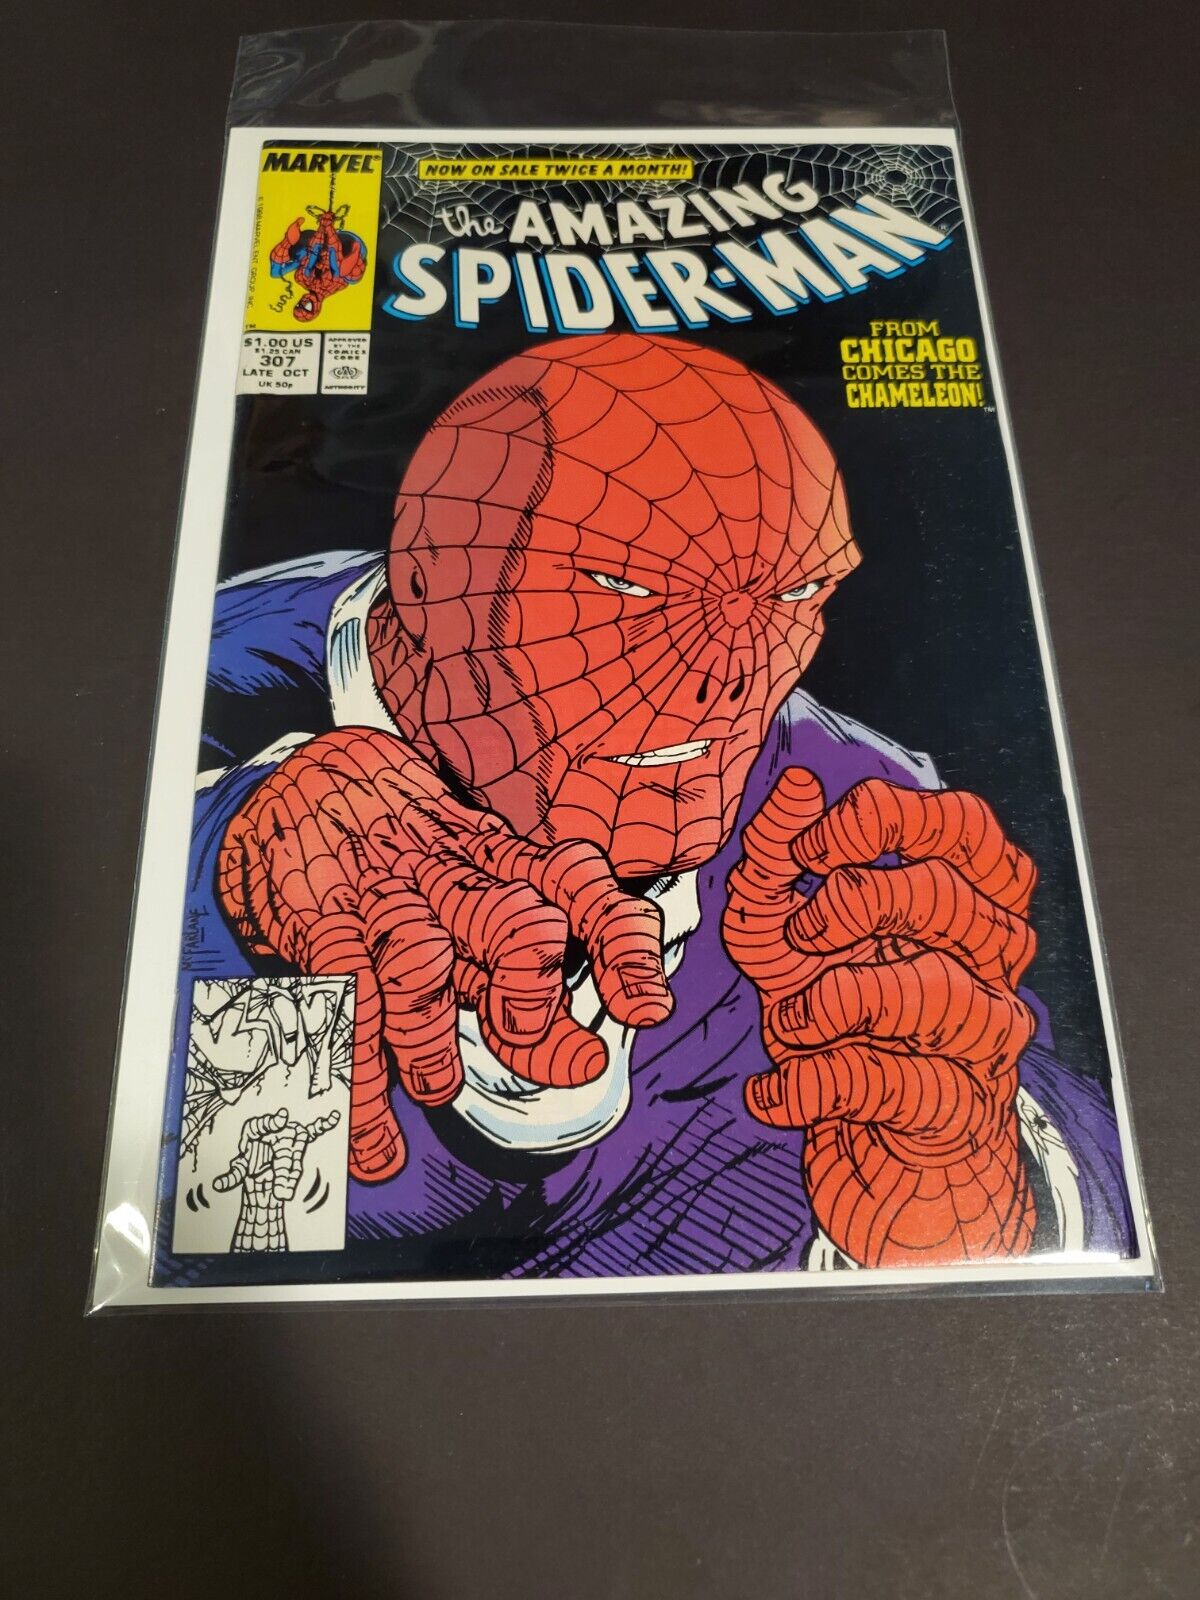 The Amazing Spider-Man #307 (Marvel, Oct 1988) ☆ Authentic ☆